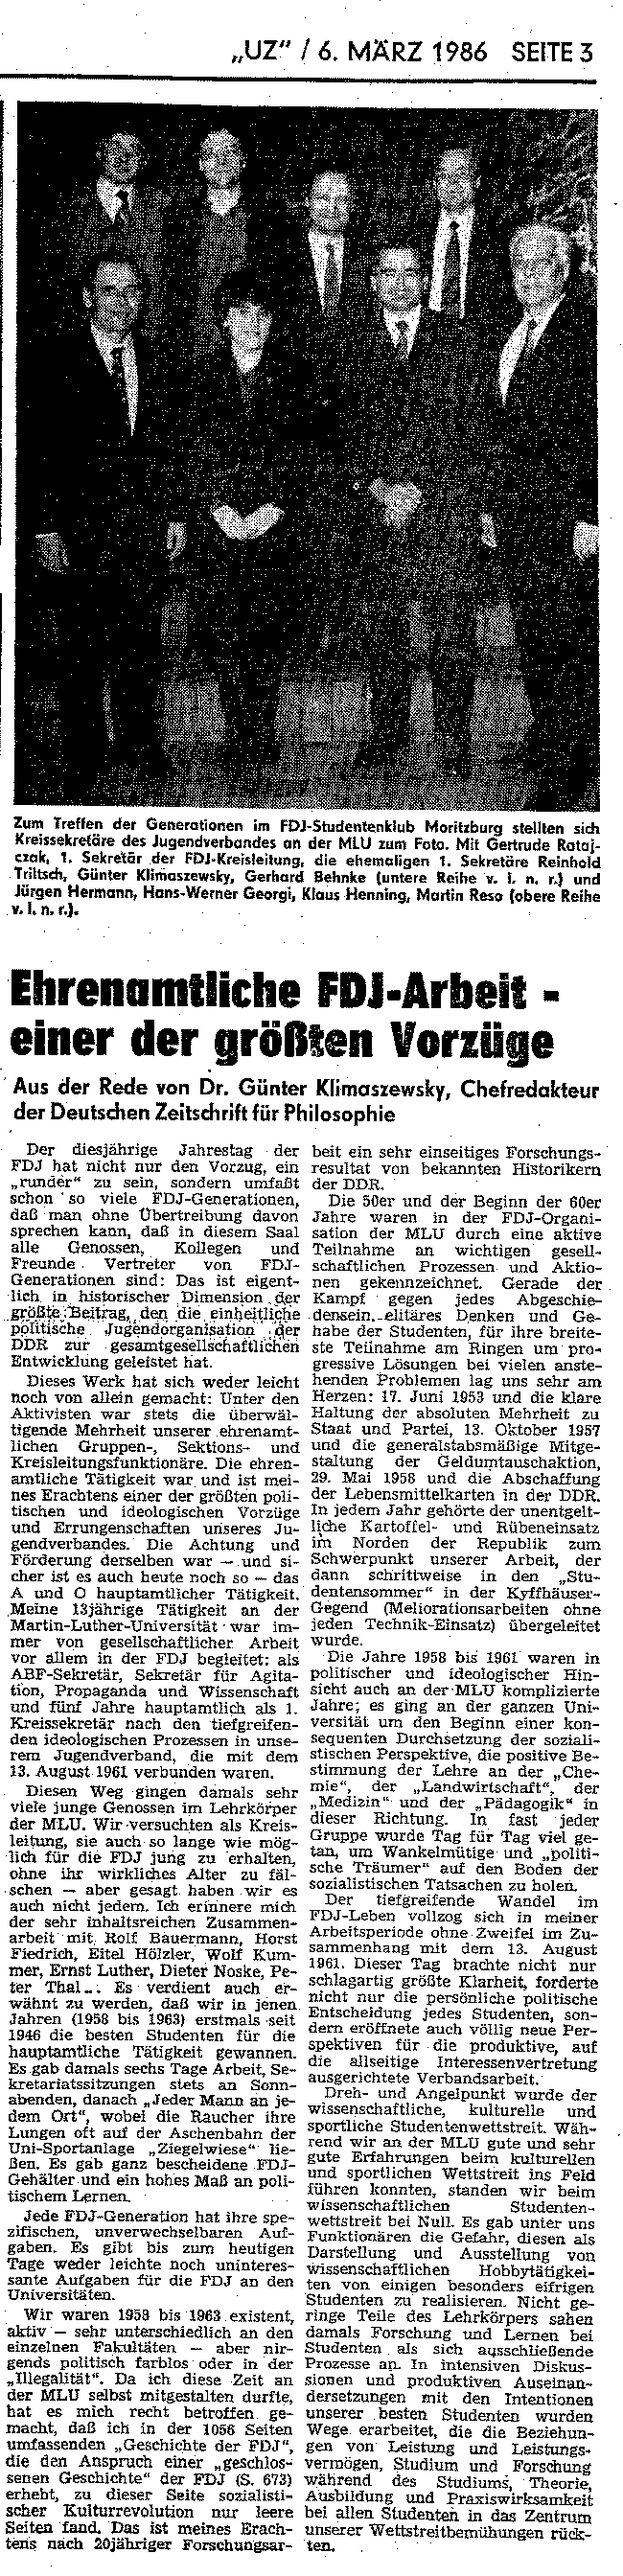 UZ vom 6. März 1986 S.3 mit Günter Klimaszewsky.gif